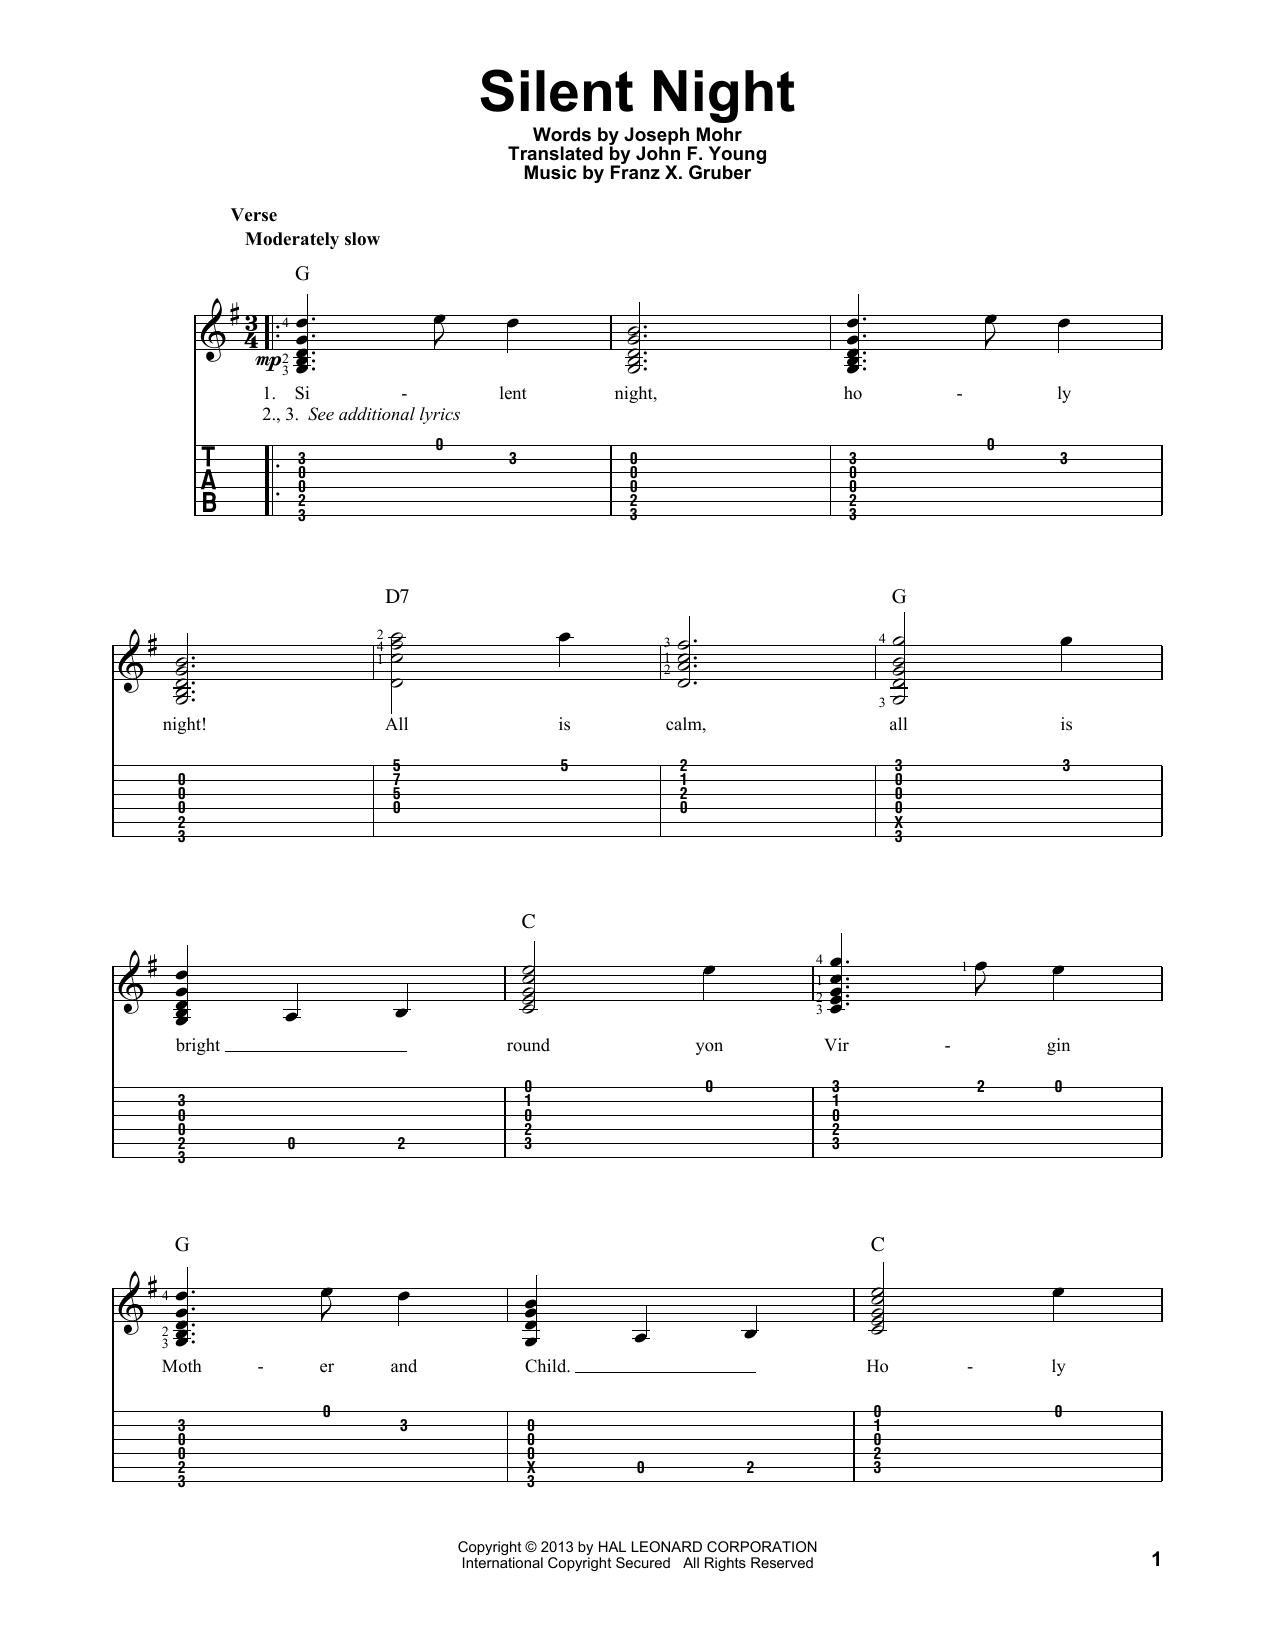 Susan Boyle Silent Night Sheet Music Notes & Chords for Guitar Tab - Download or Print PDF